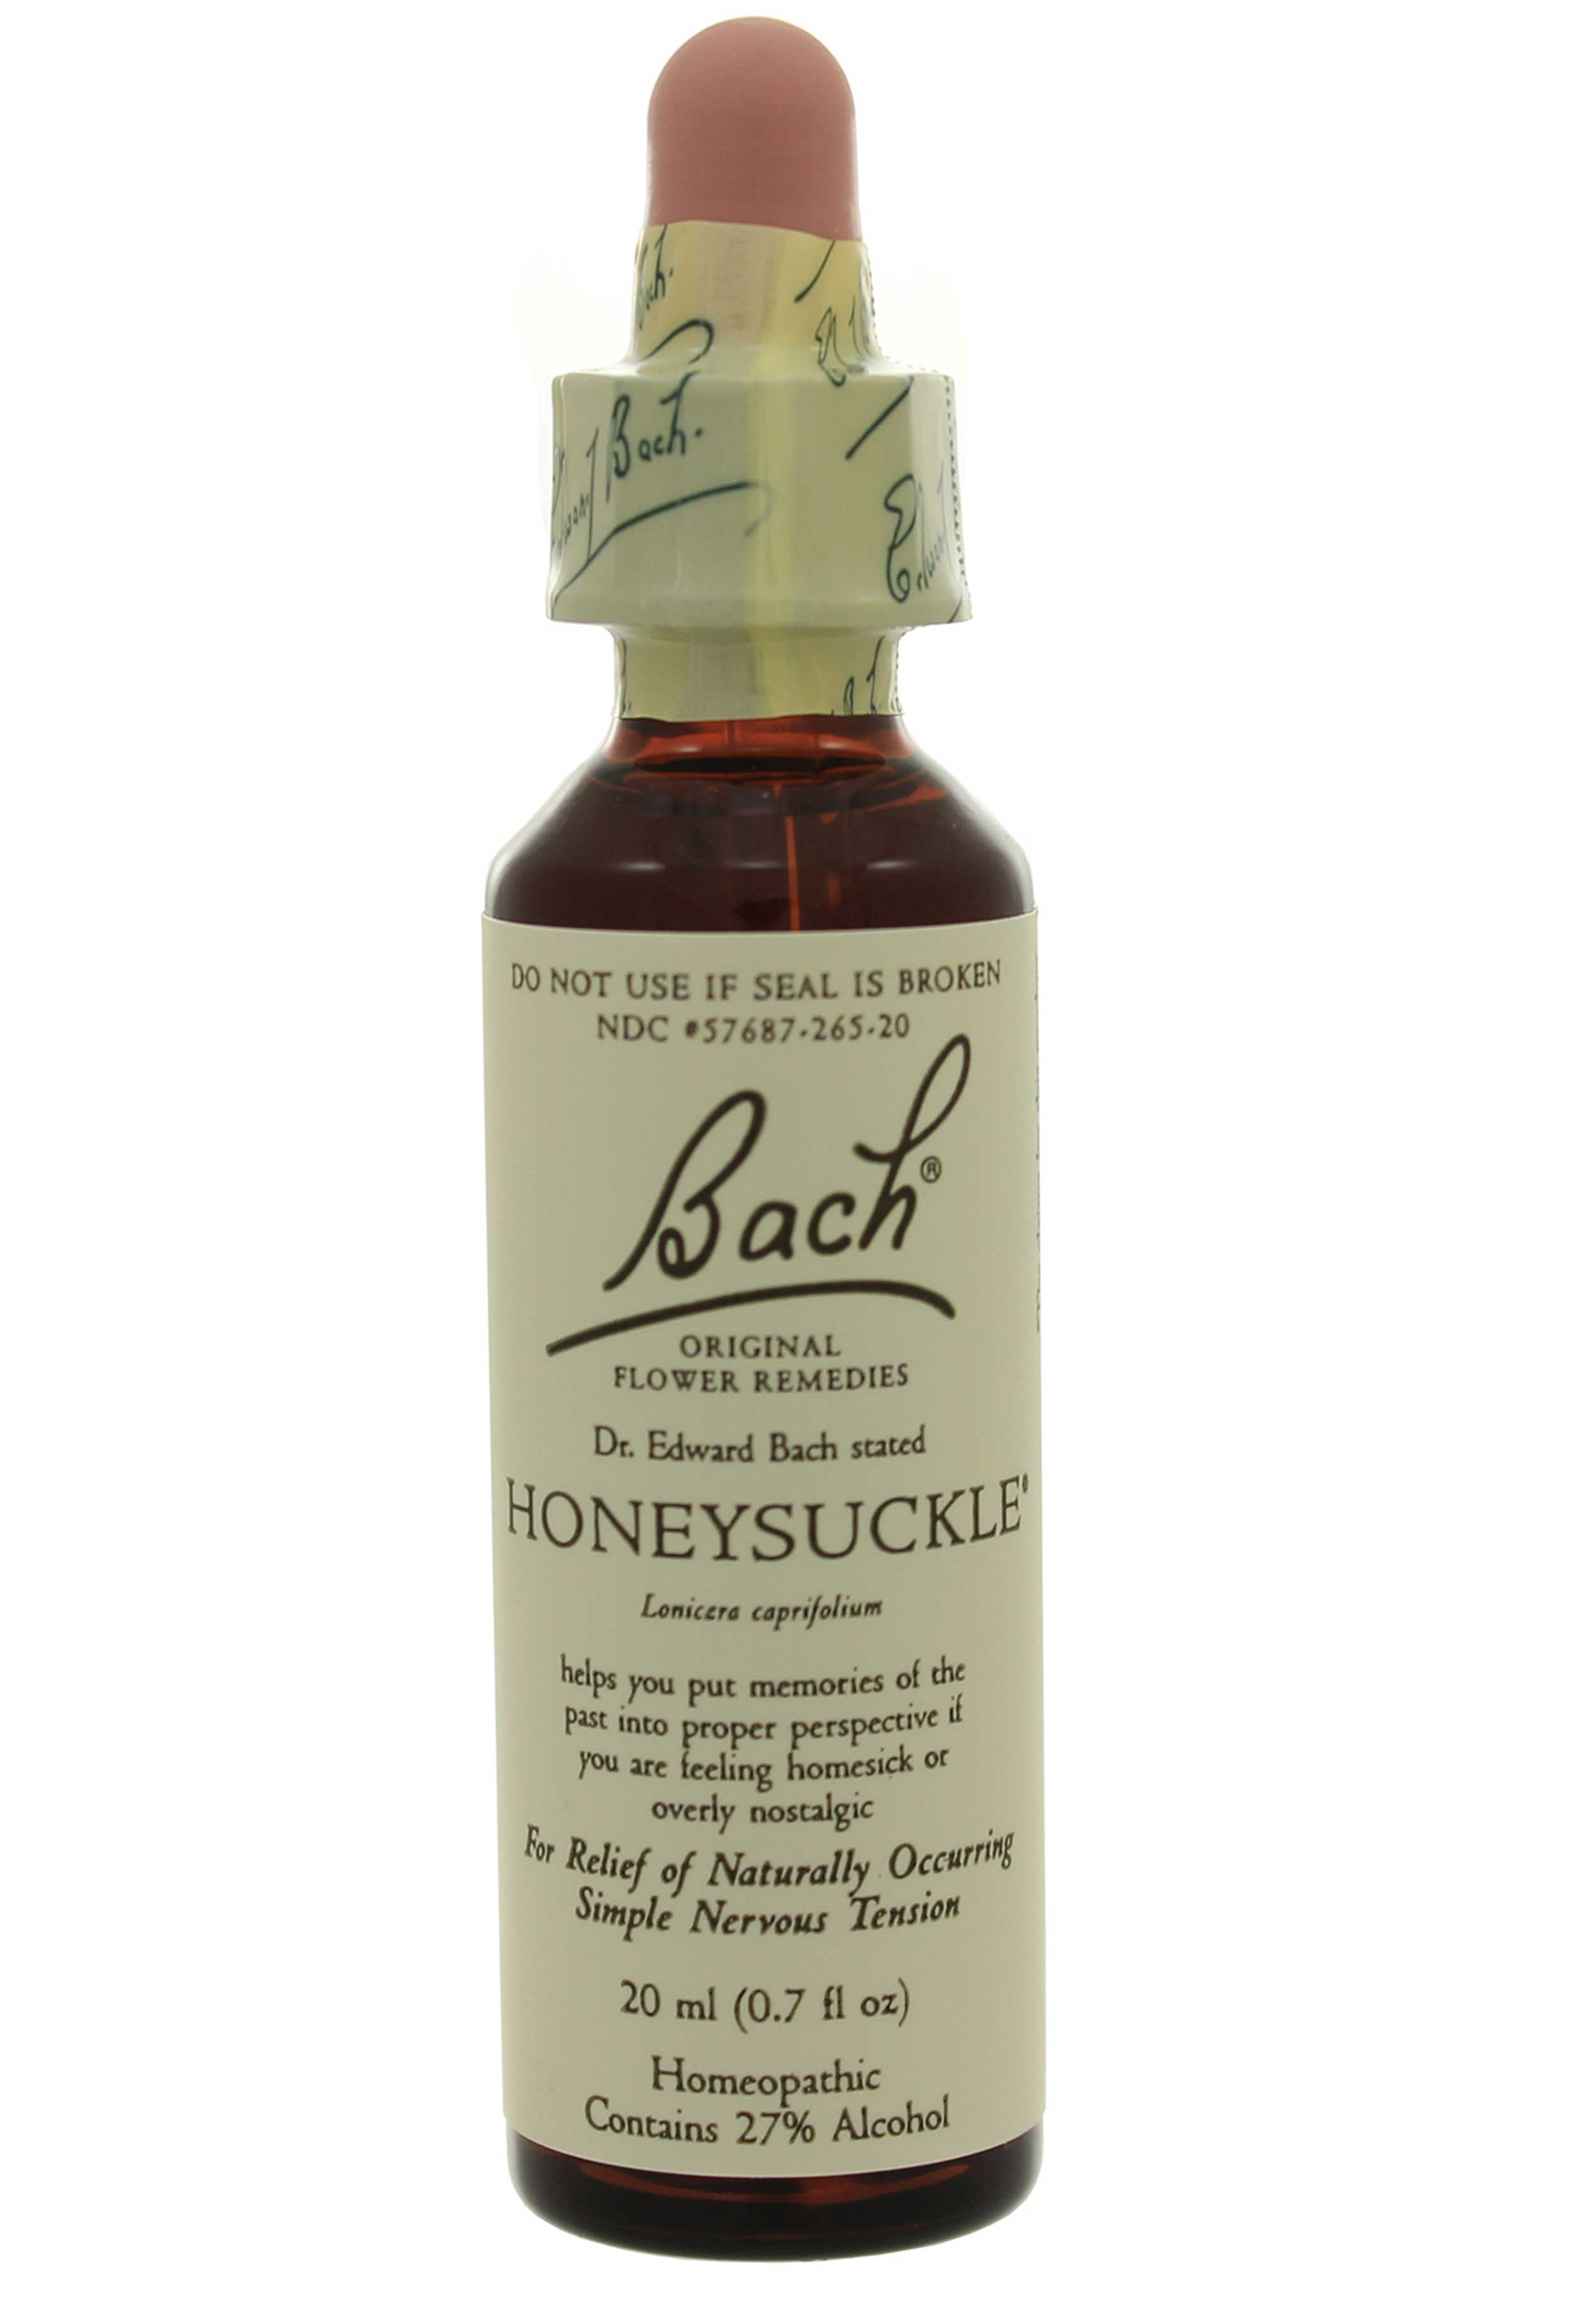 Bach Flower Remedies Honeysuckle